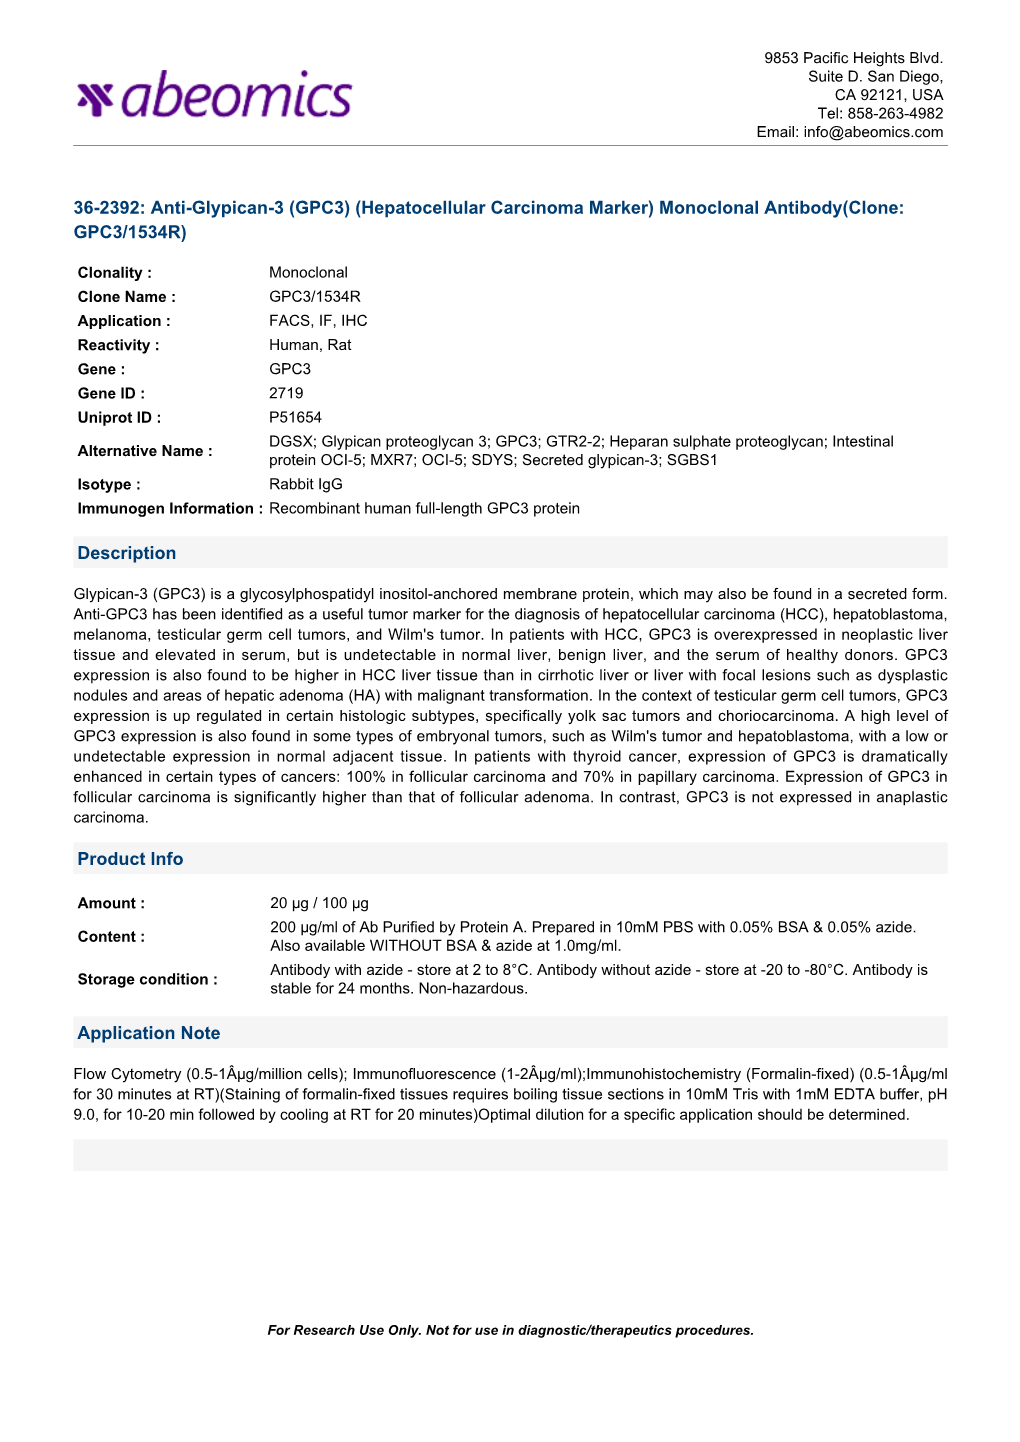 Hepatocellular Carcinoma Marker) Monoclonal Antibody(Clone: GPC3/1534R